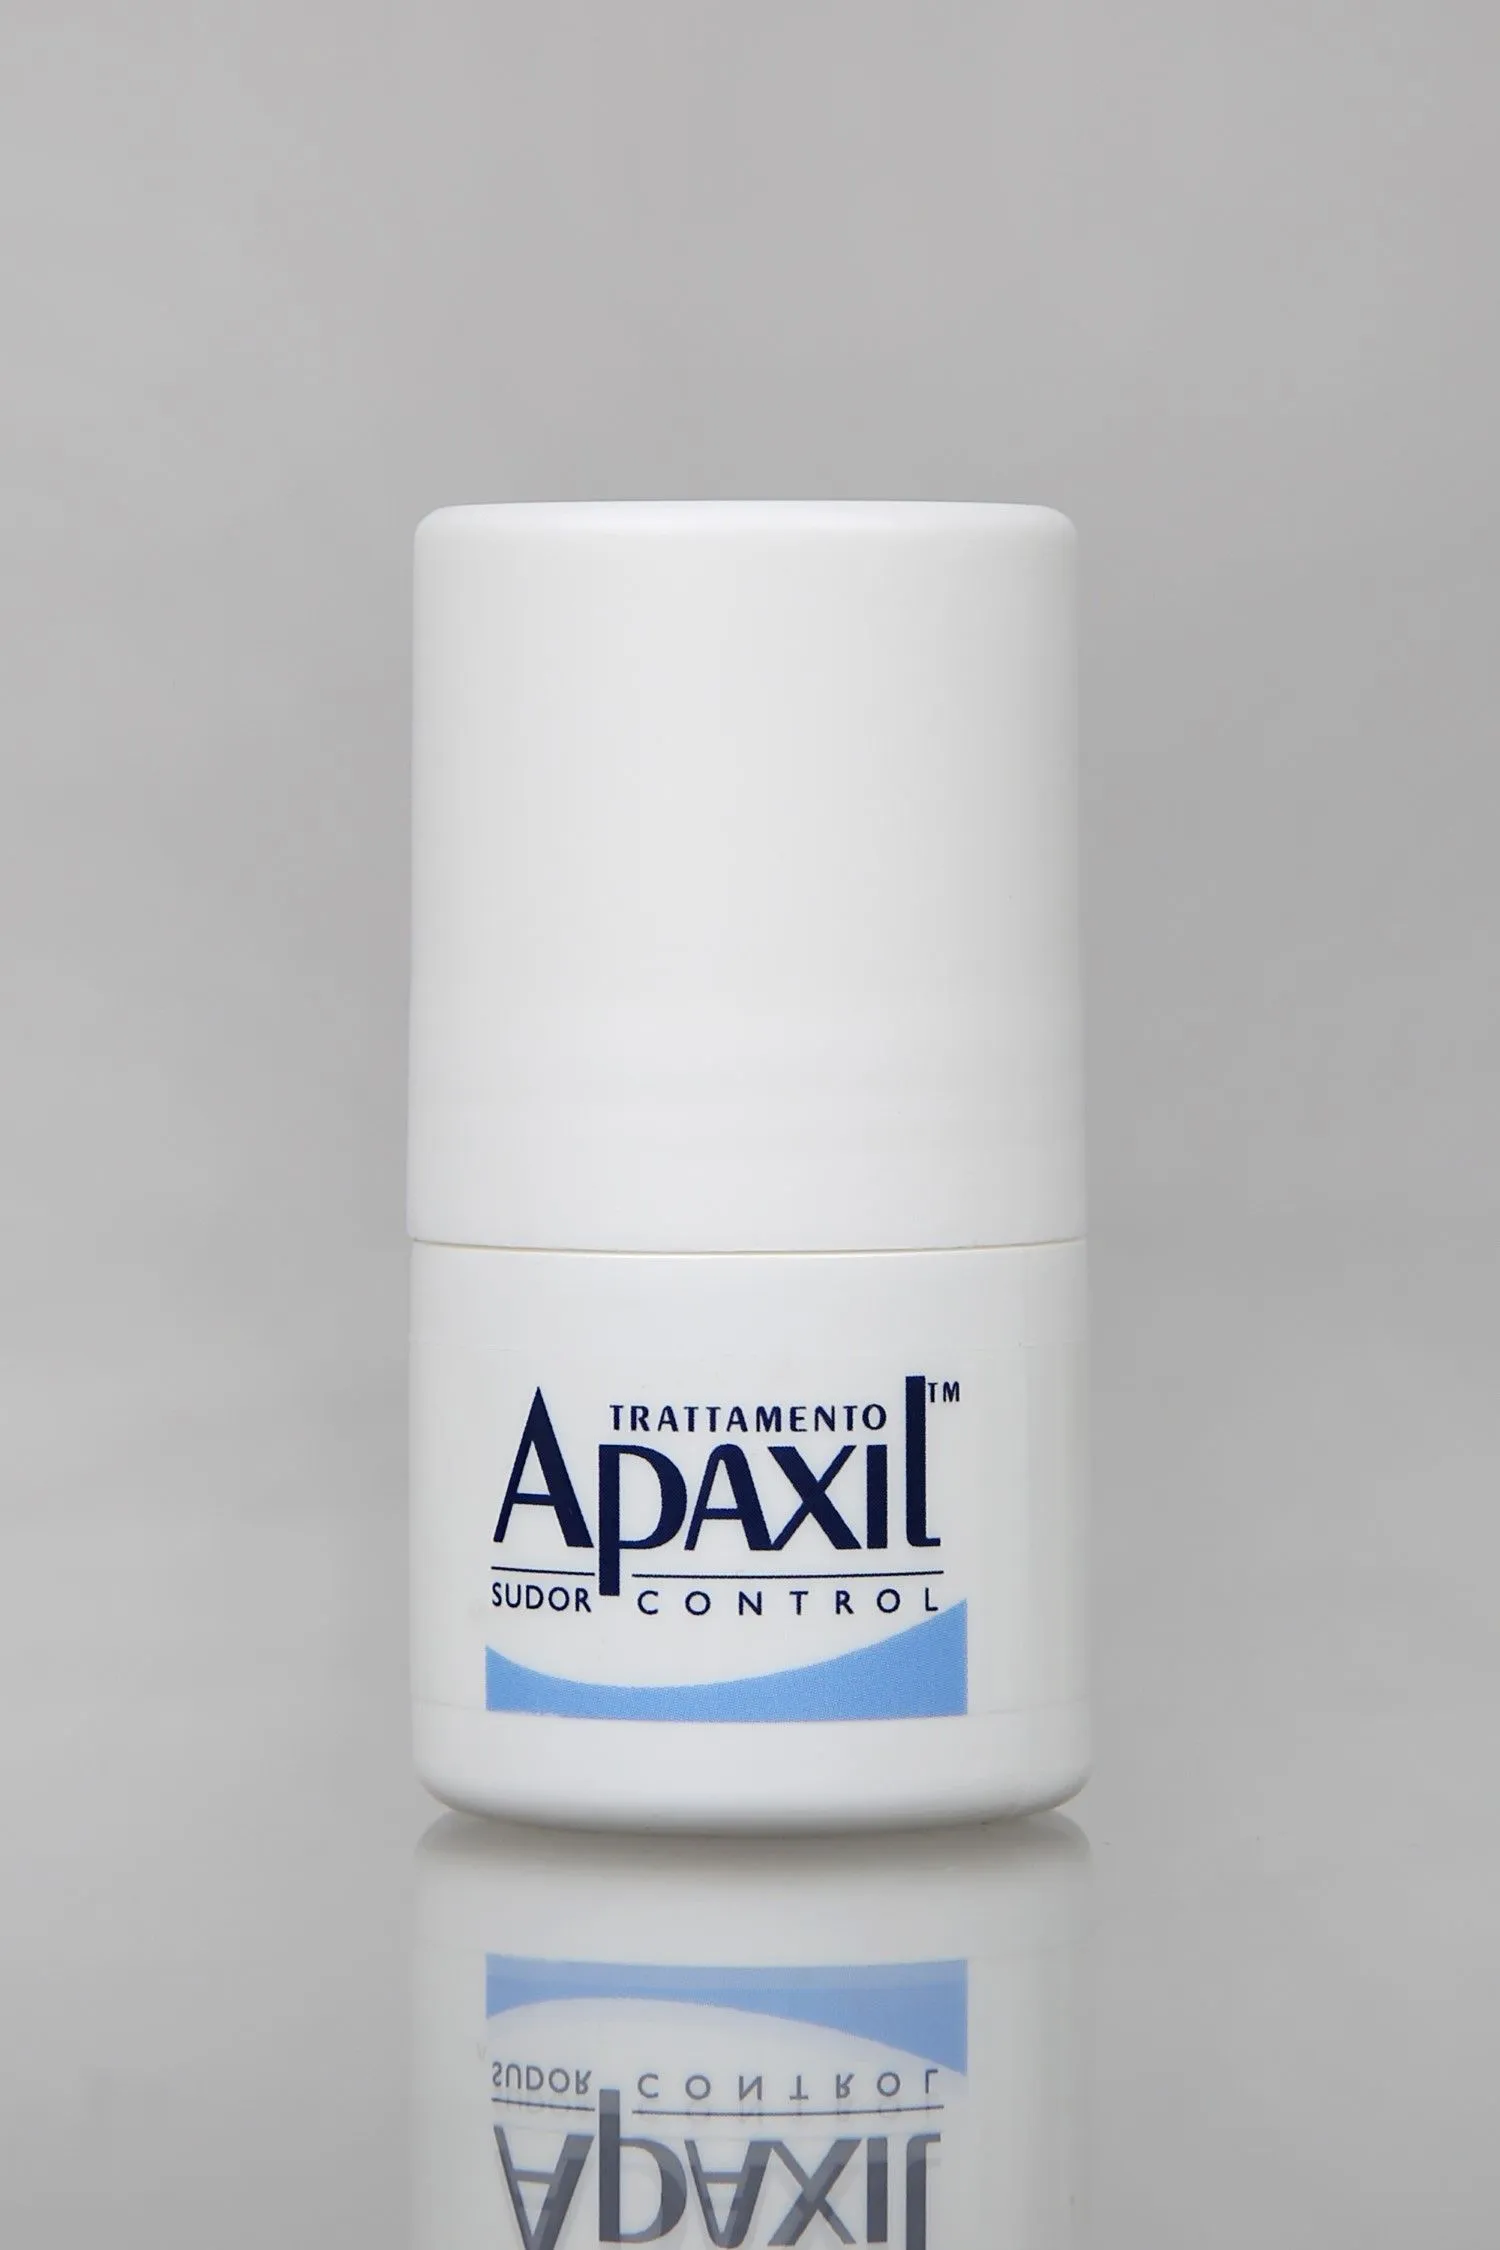  Sudor Control Deodorante Ascelle Notte 25ml